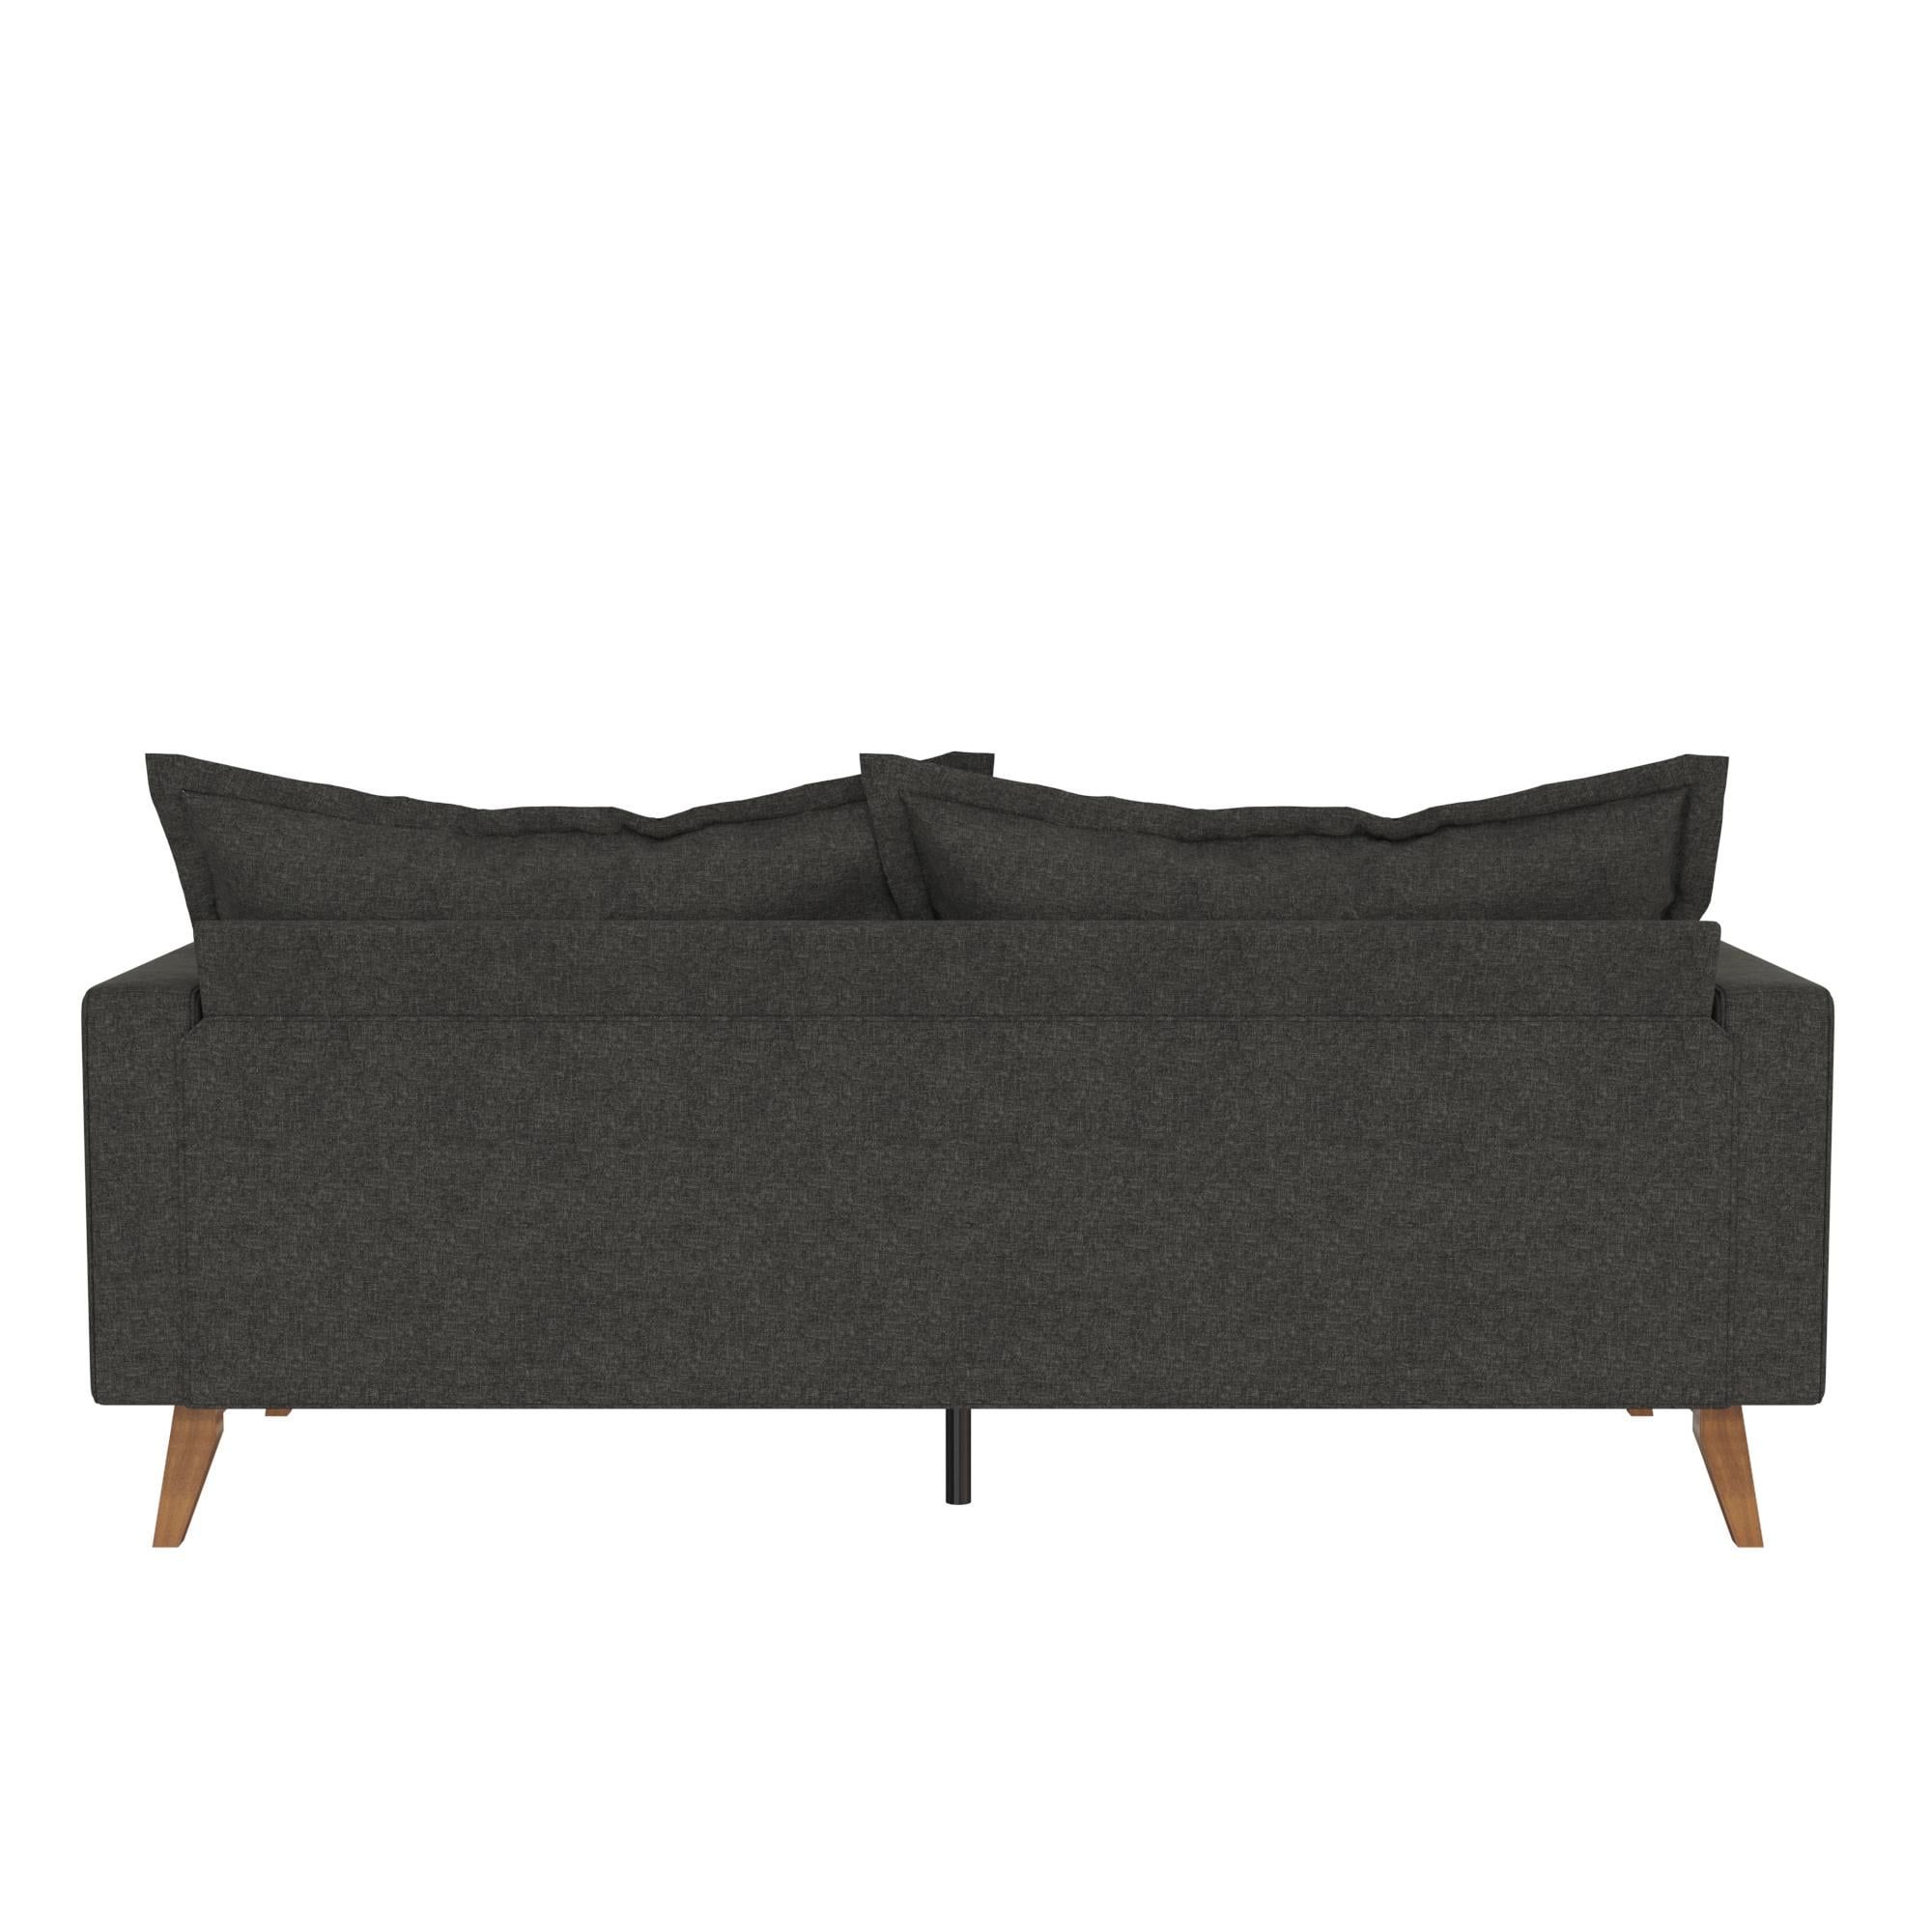 Dhp Miriam Pillowback Wood Base Sofa, Gray Linen – Walmart Within Sofas With Pillowback Wood Bases (View 4 of 15)